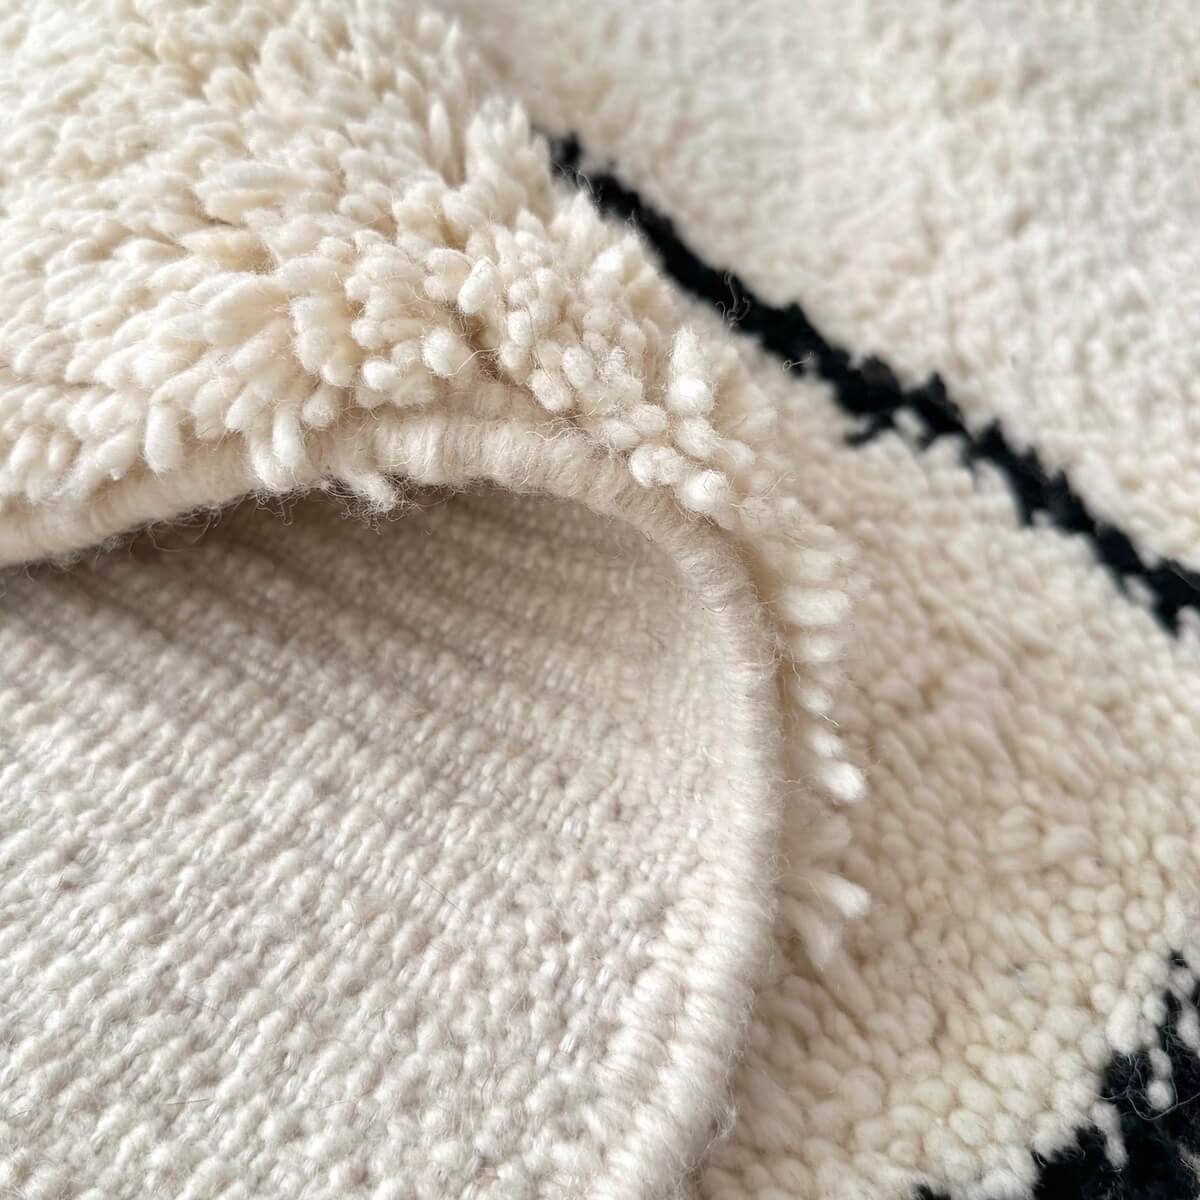 covor modern gros si pufos din lana creat manual in maroc, model alb cu dungi negre asimetrice, zoom